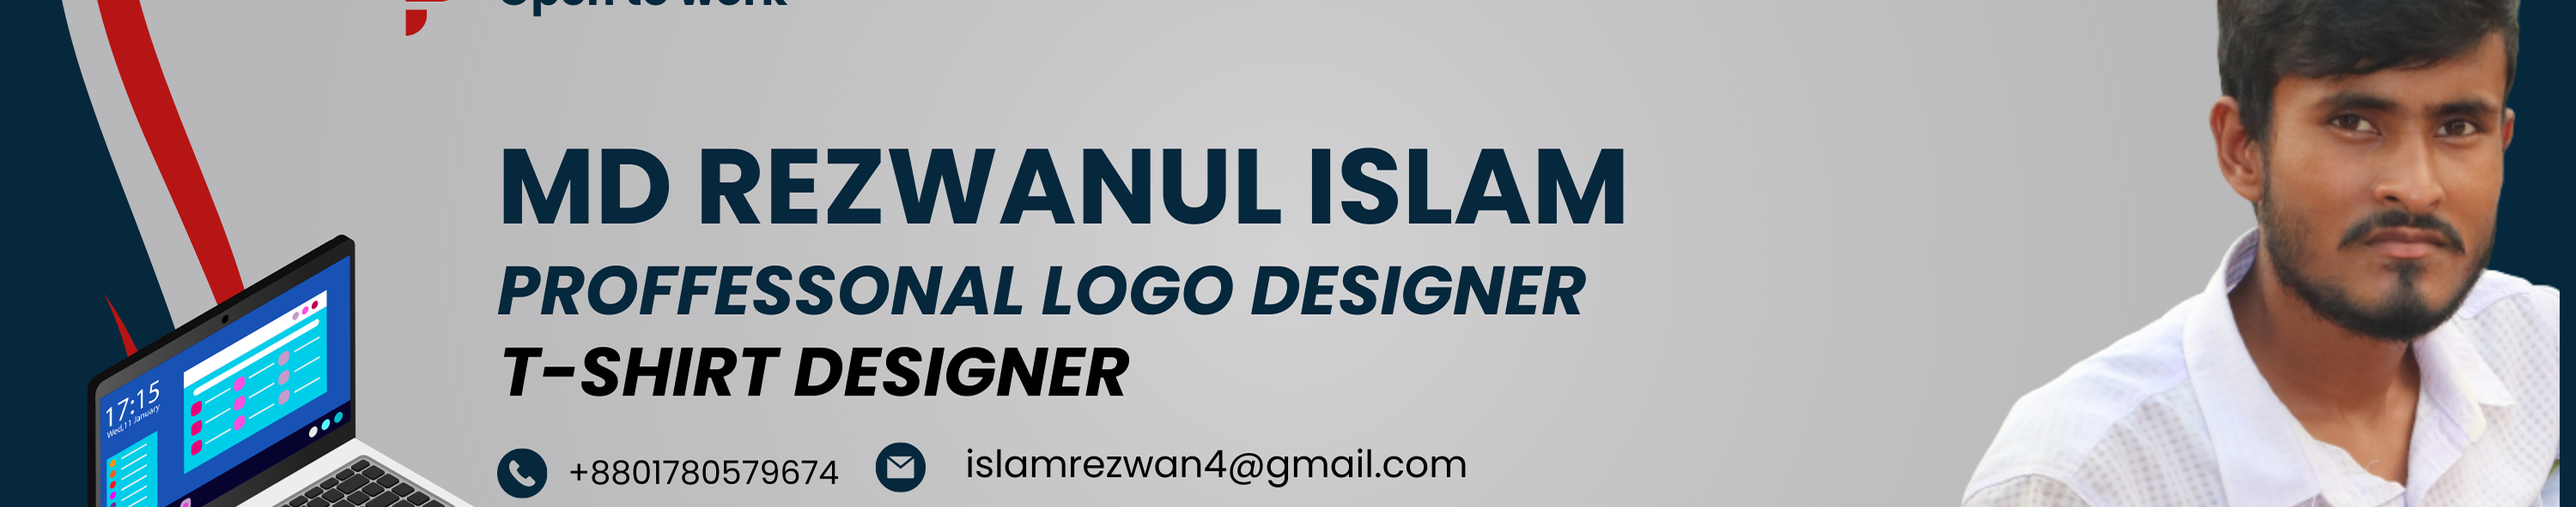 Profil-Banner von Md Rezwanul Islam